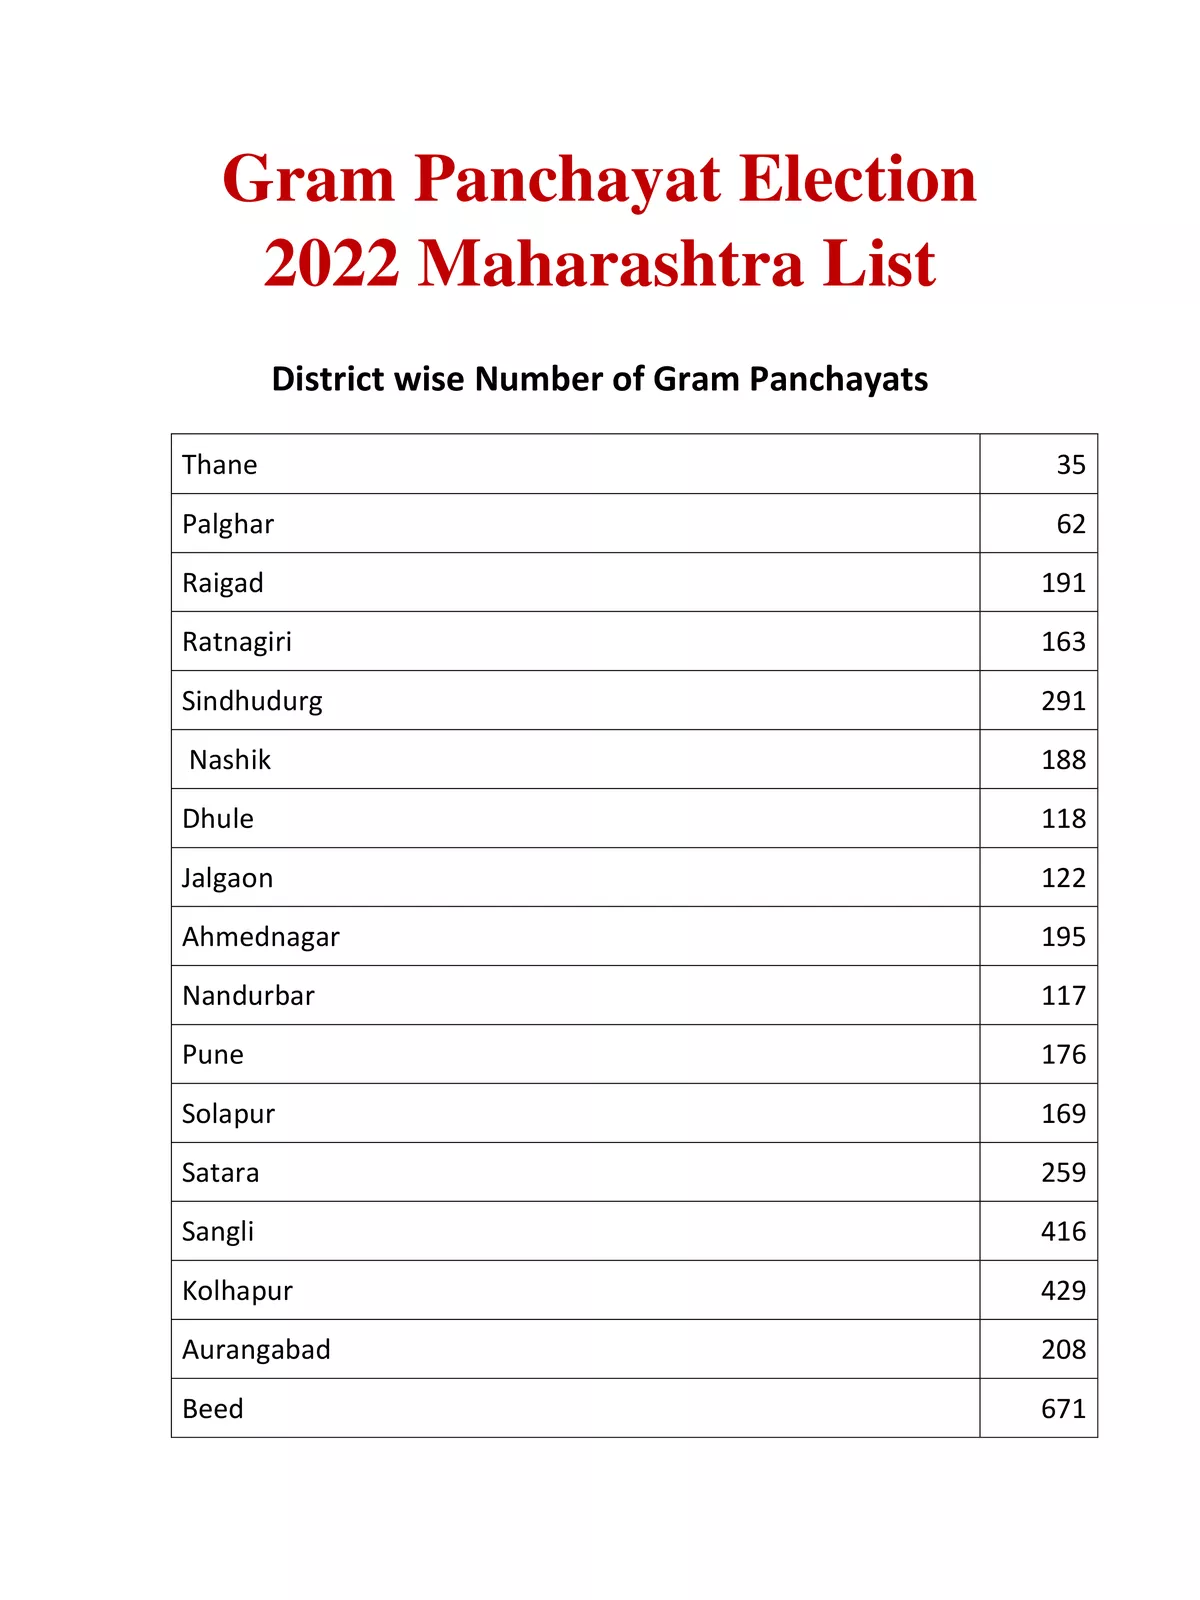 Gram Panchayat Election 2022 Maharashtra Result List